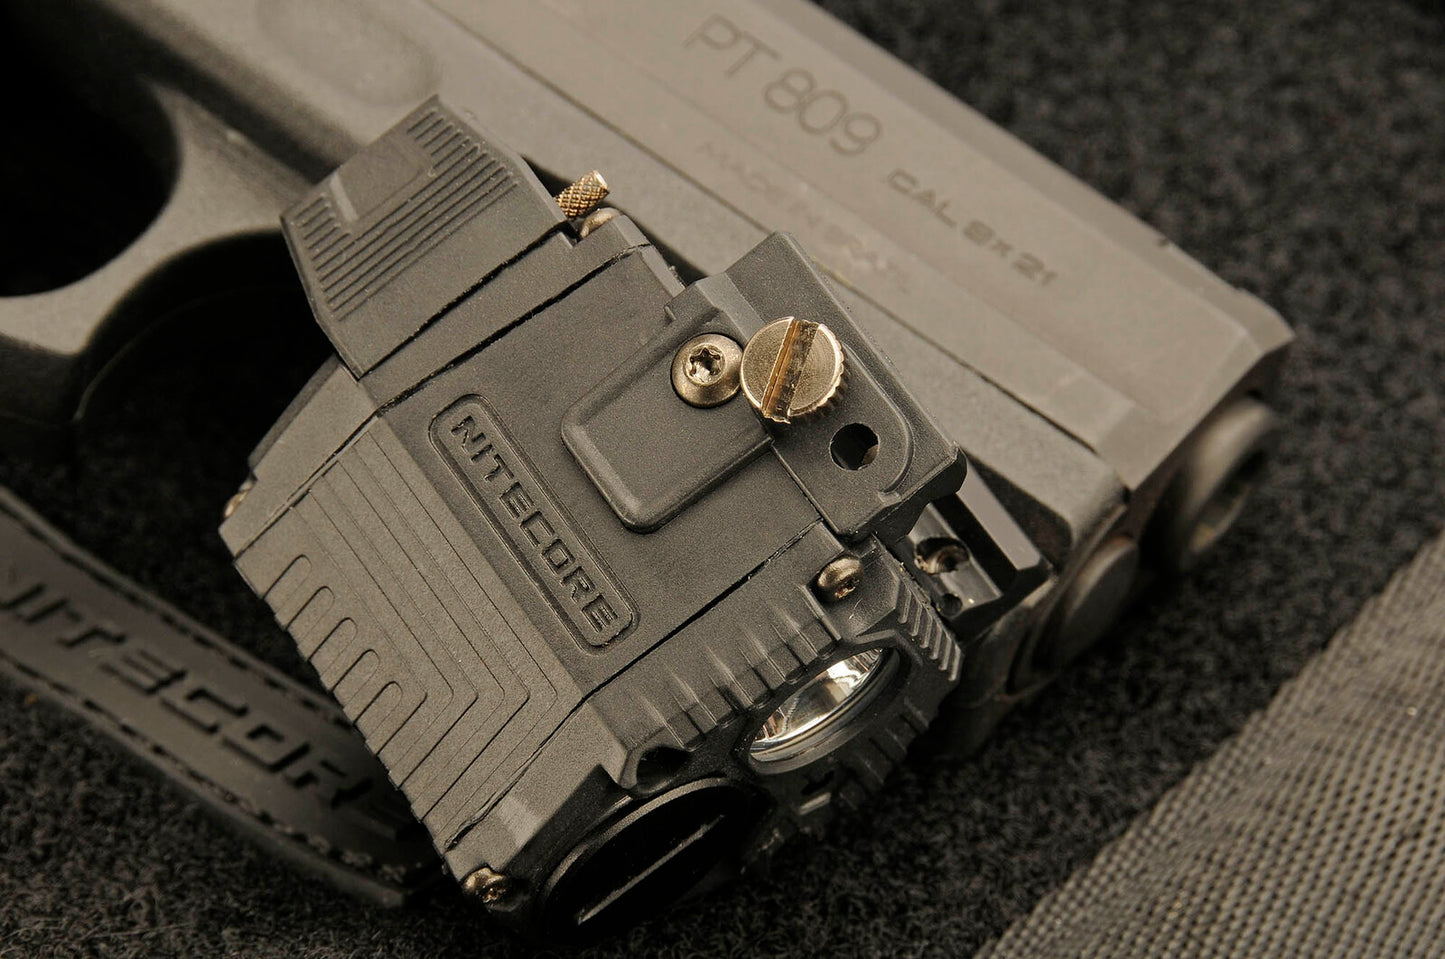 Nitecore Nitecore Pistol Light W/ Laser 300 Lumen - Fits Pic Rail+ Glock #npl10 Dim Gray